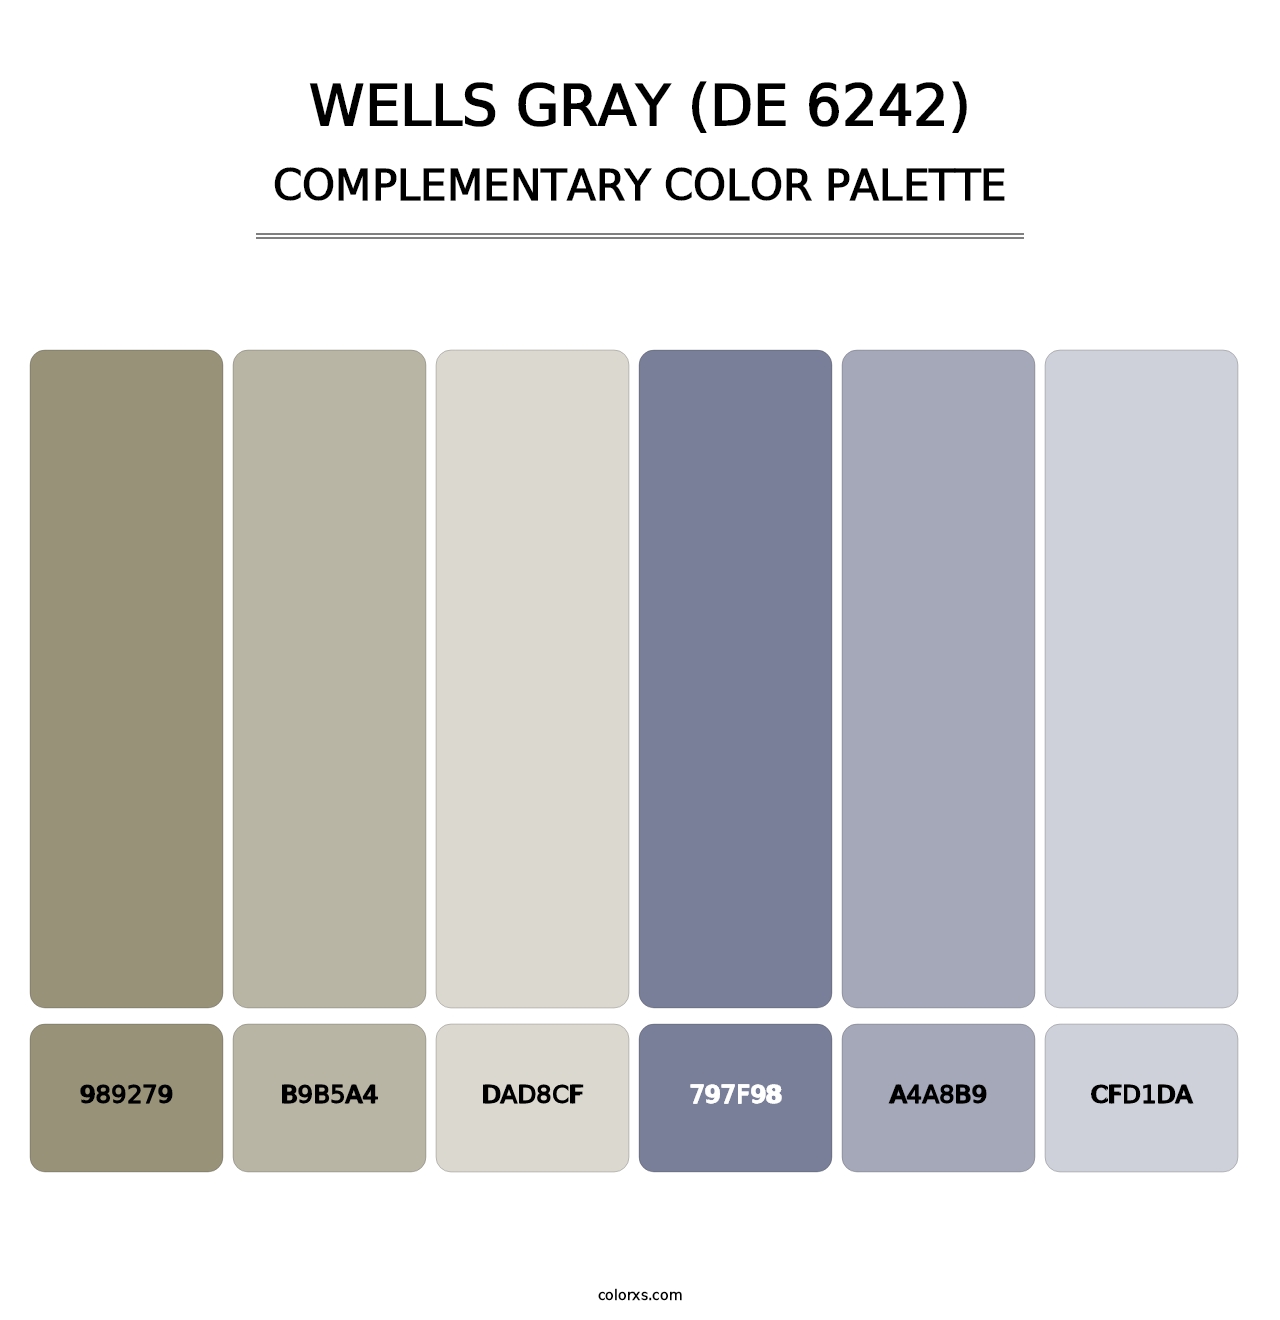 Wells Gray (DE 6242) - Complementary Color Palette